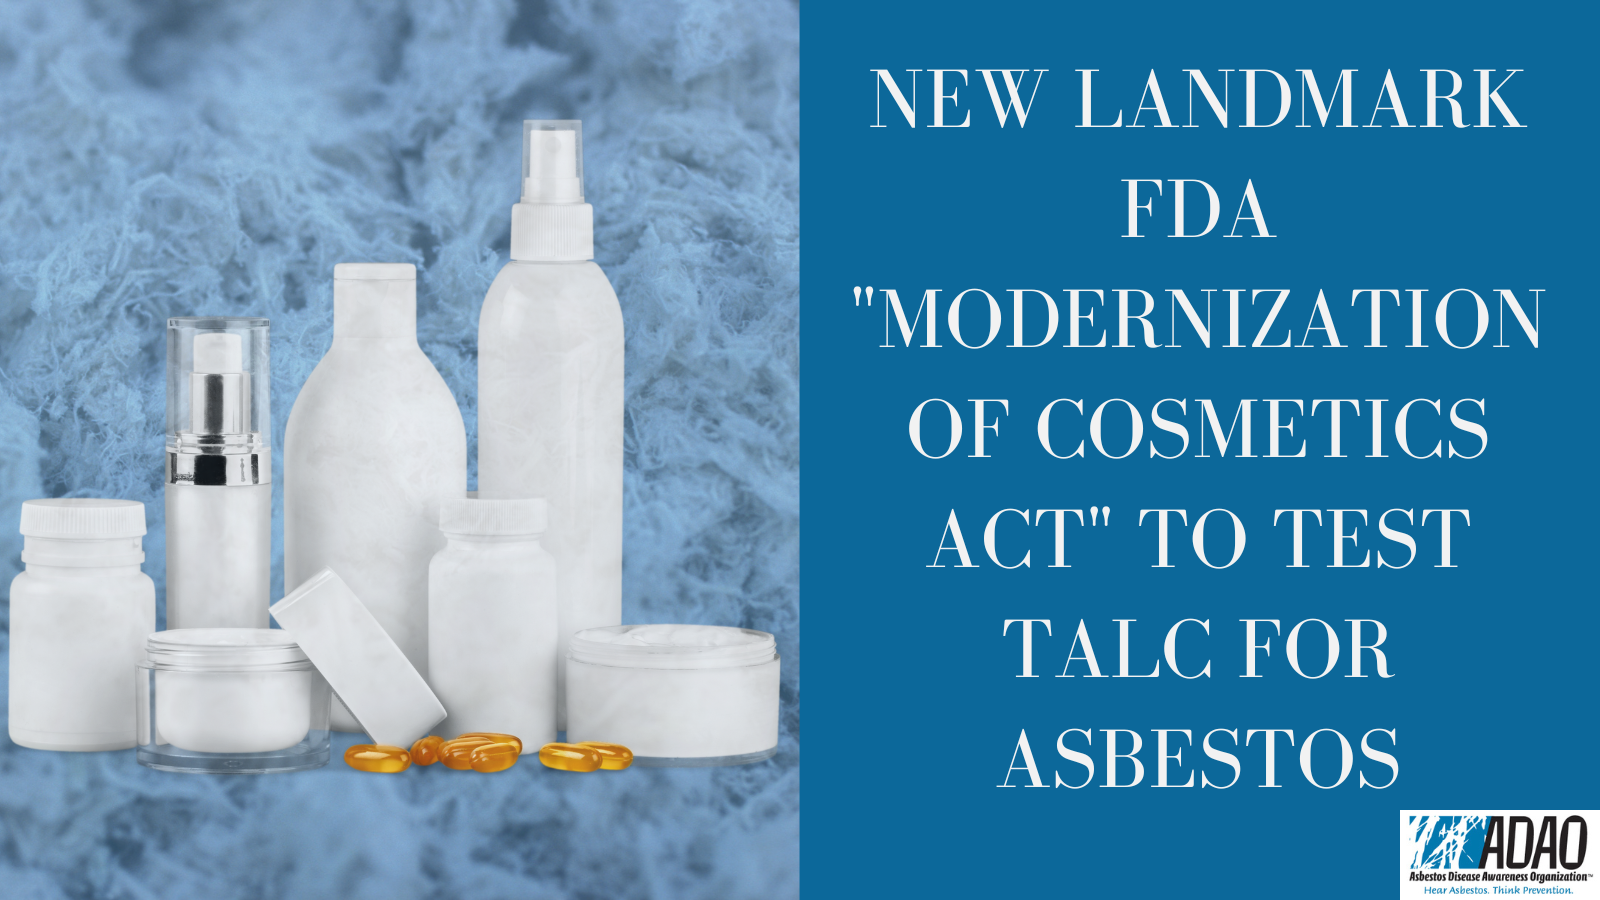 Cosmetics companies face major concern over asbestos contamination of talc